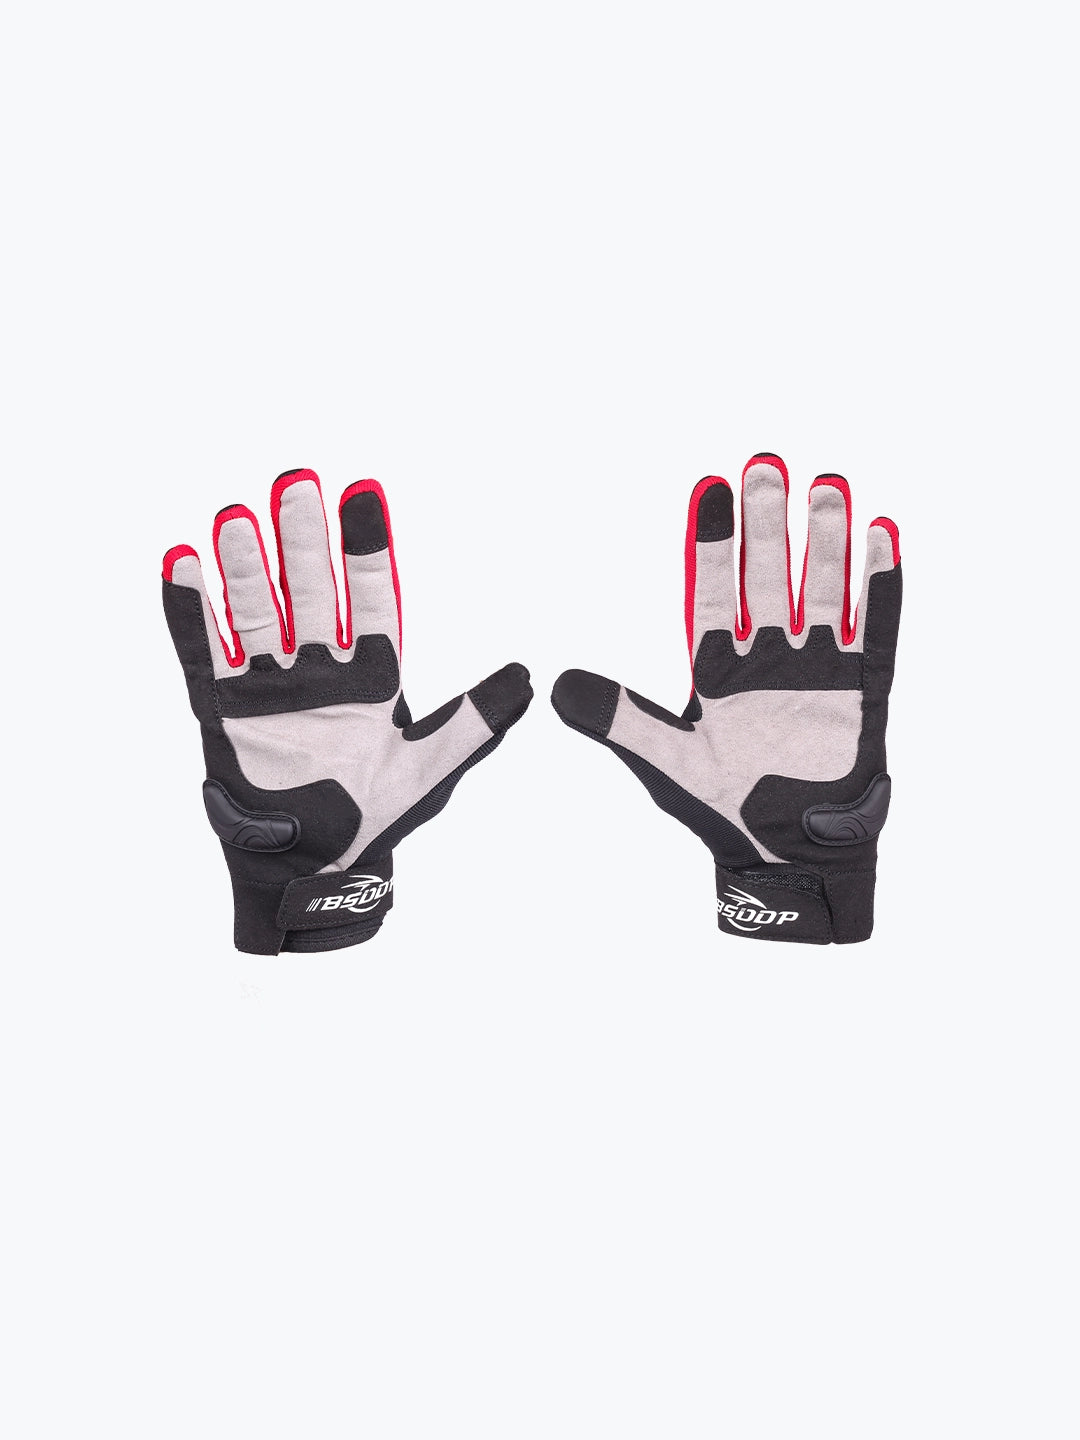 BSDDP Gloves A0143 Black Red